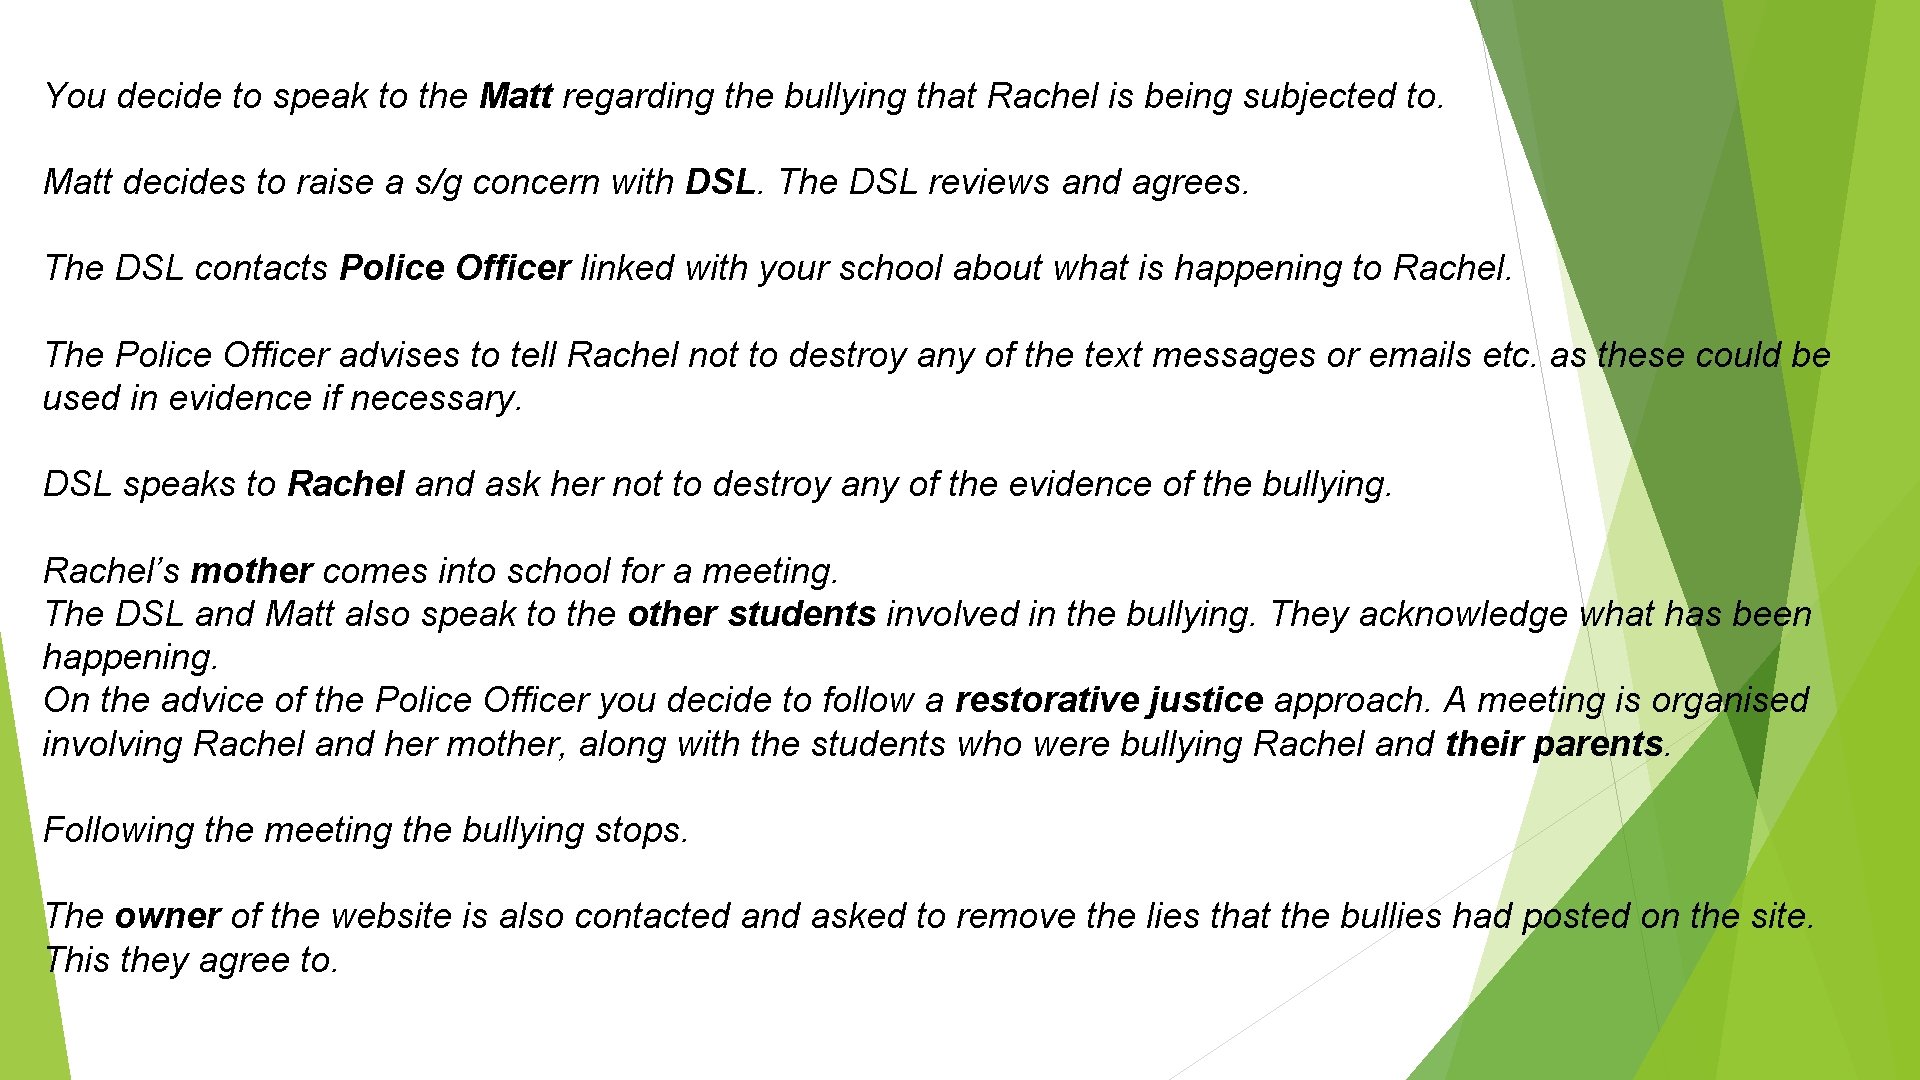 You decide to speak to the Matt regarding the bullying that Rachel is being